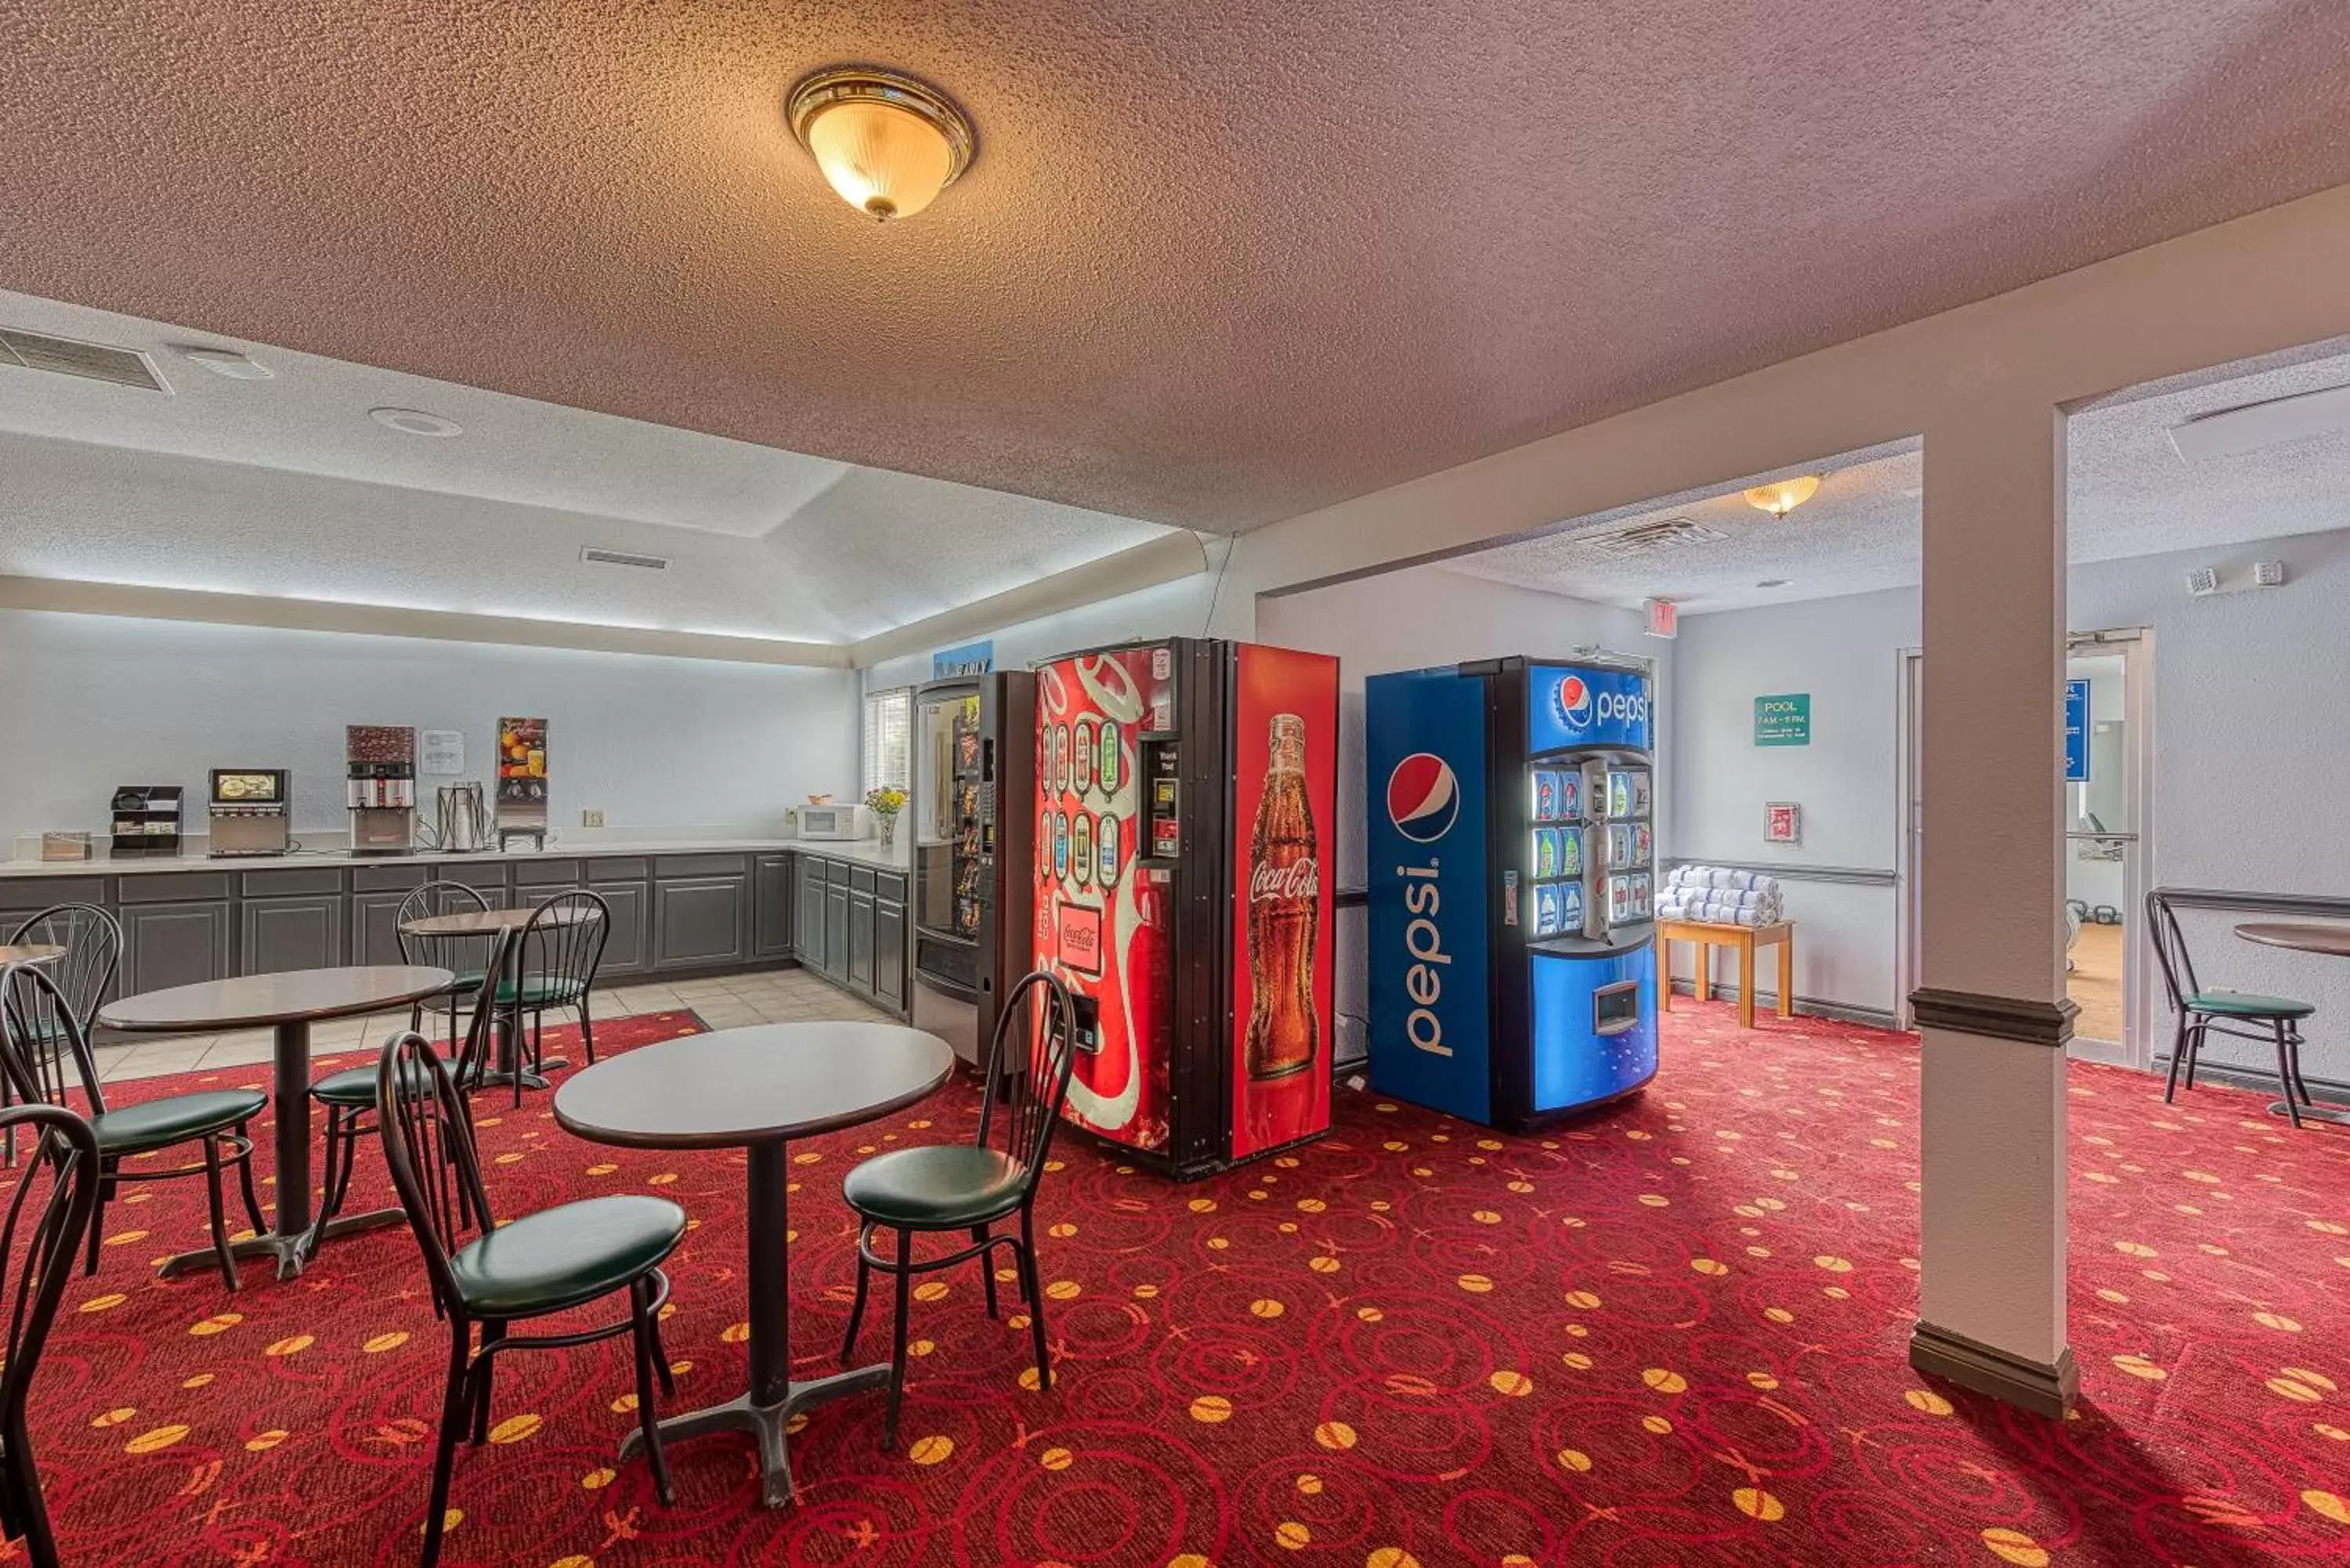 Lobby or reception in American Inn & suites